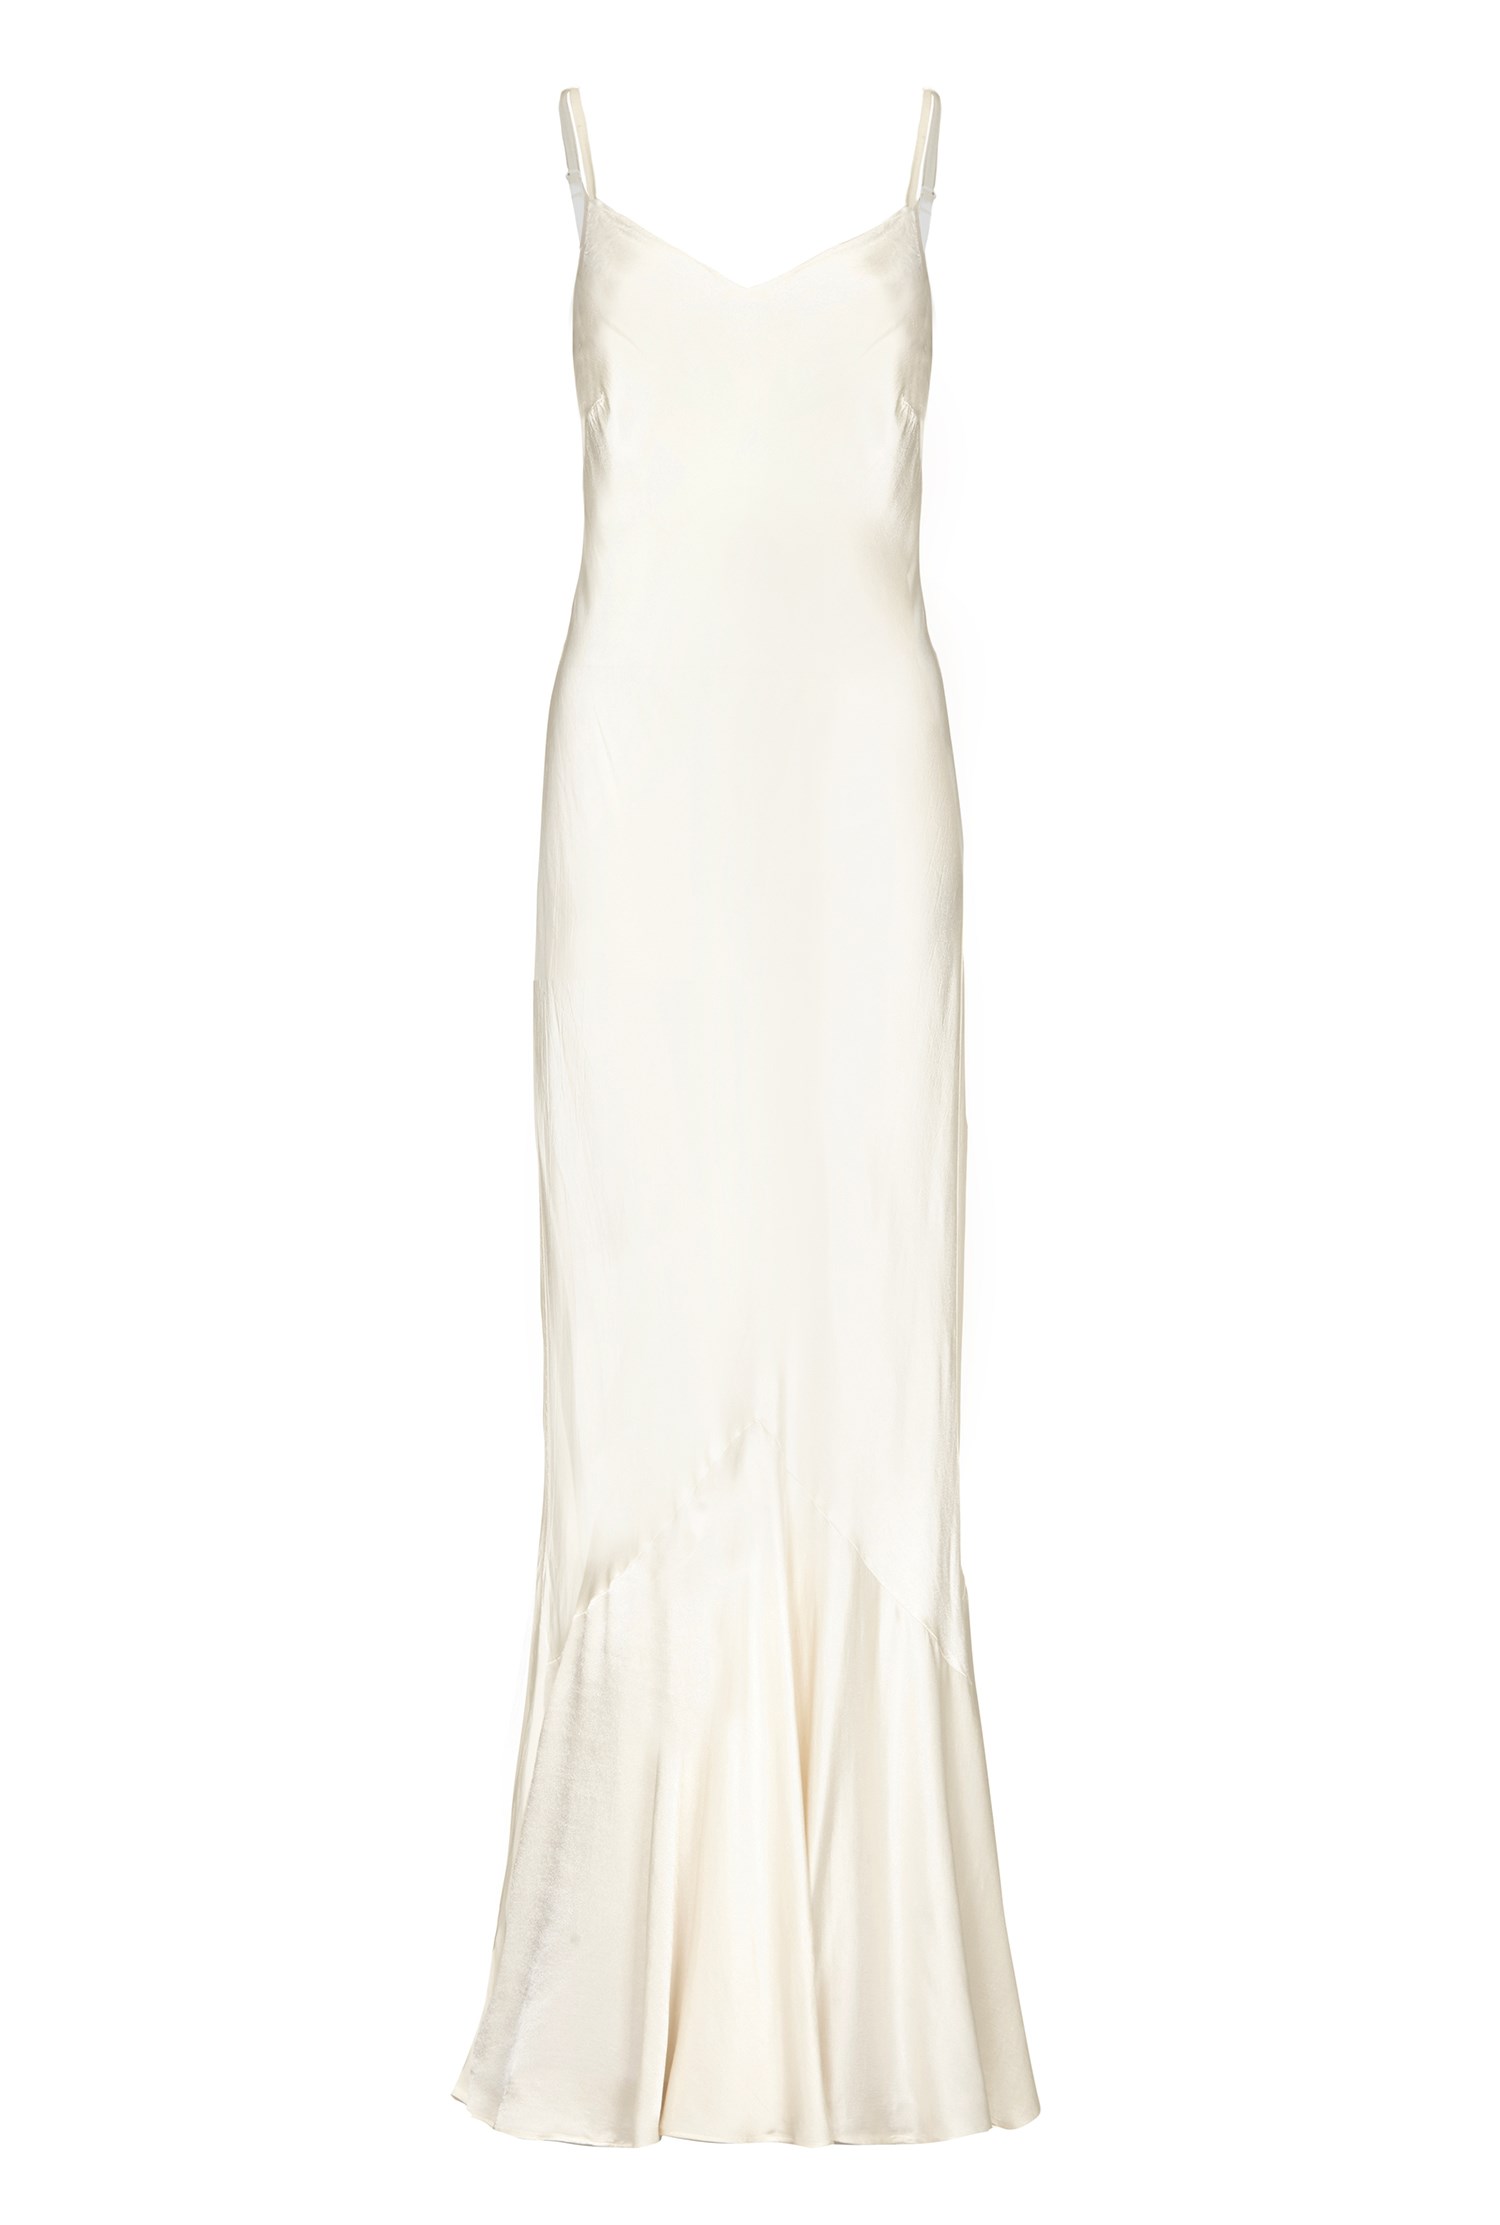 Bella Dress Ivory | Ghost.co.uk